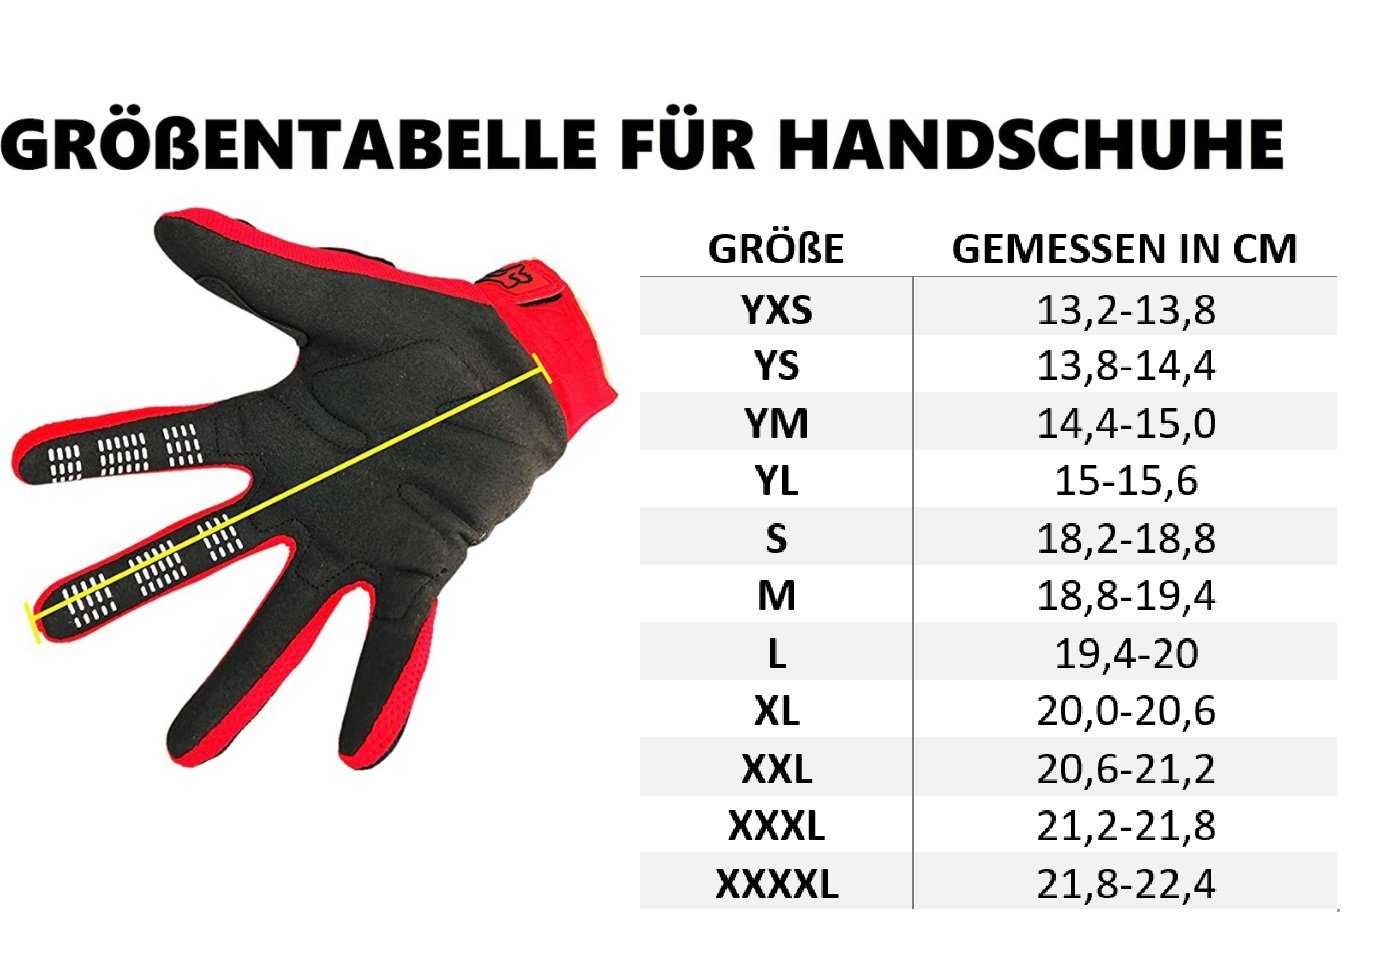 Fox Racing Dirtpaw Retro Gelb Flu Glove Fox Fahrradhandschuhe Handschuhe